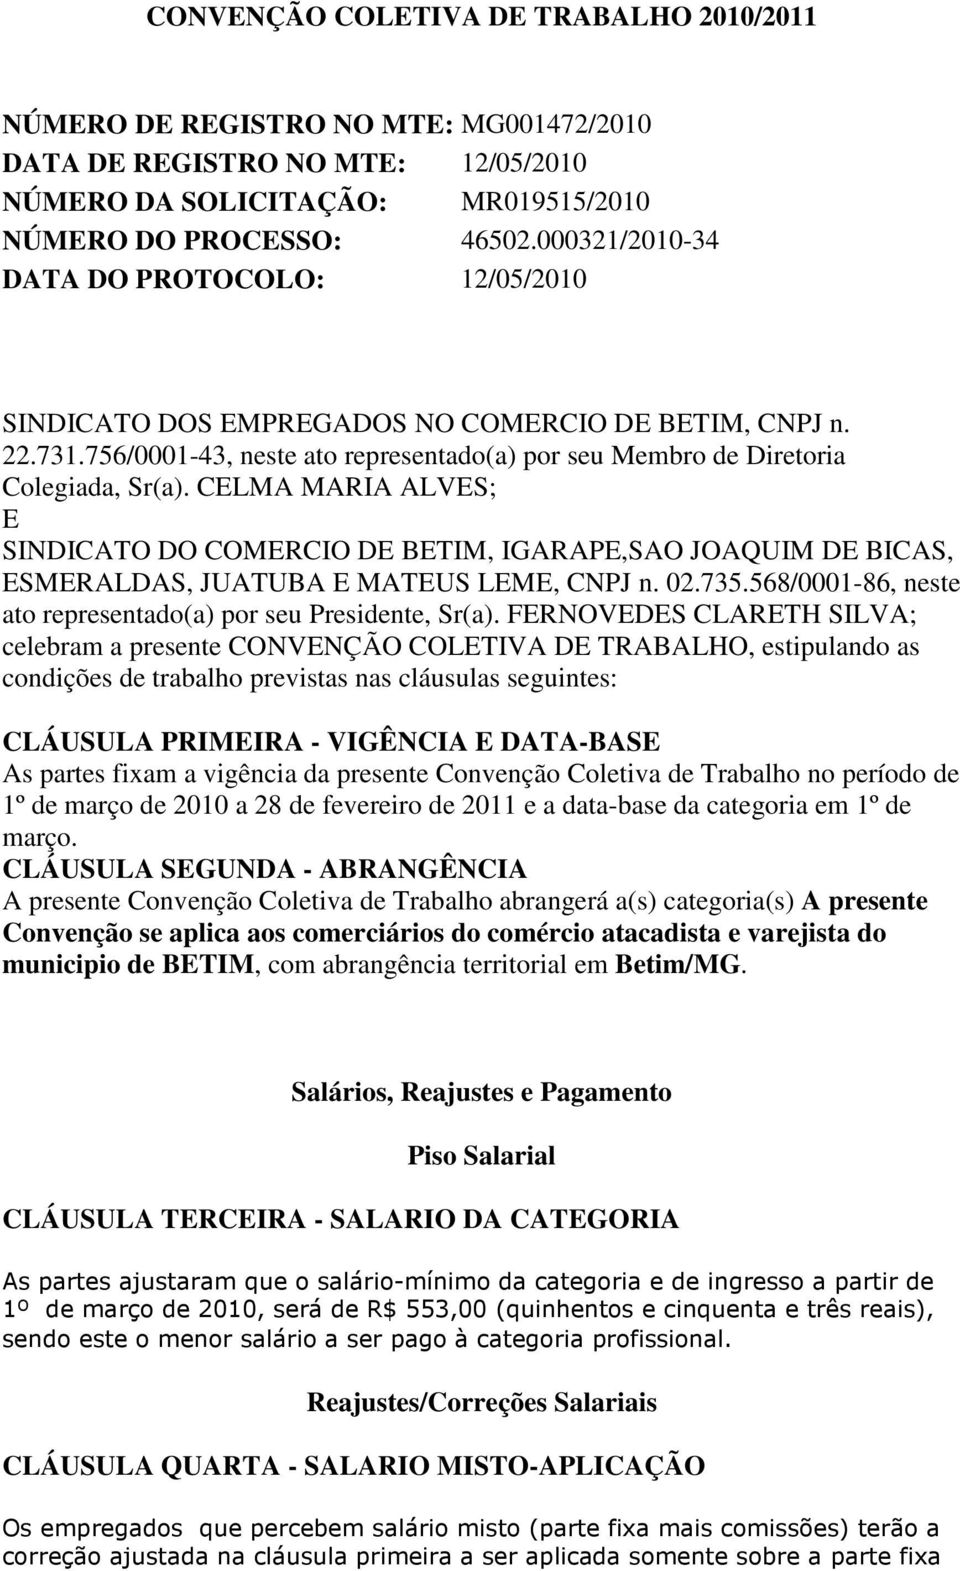 CELMA MARIA ALVES; E SINDICATO DO COMERCIO DE BETIM, IGARAPE,SAO JOAQUIM DE BICAS, ESMERALDAS, JUATUBA E MATEUS LEME, CNPJ n. 02.735.568/0001-86, neste ato representado(a) por seu Presidente, Sr(a).